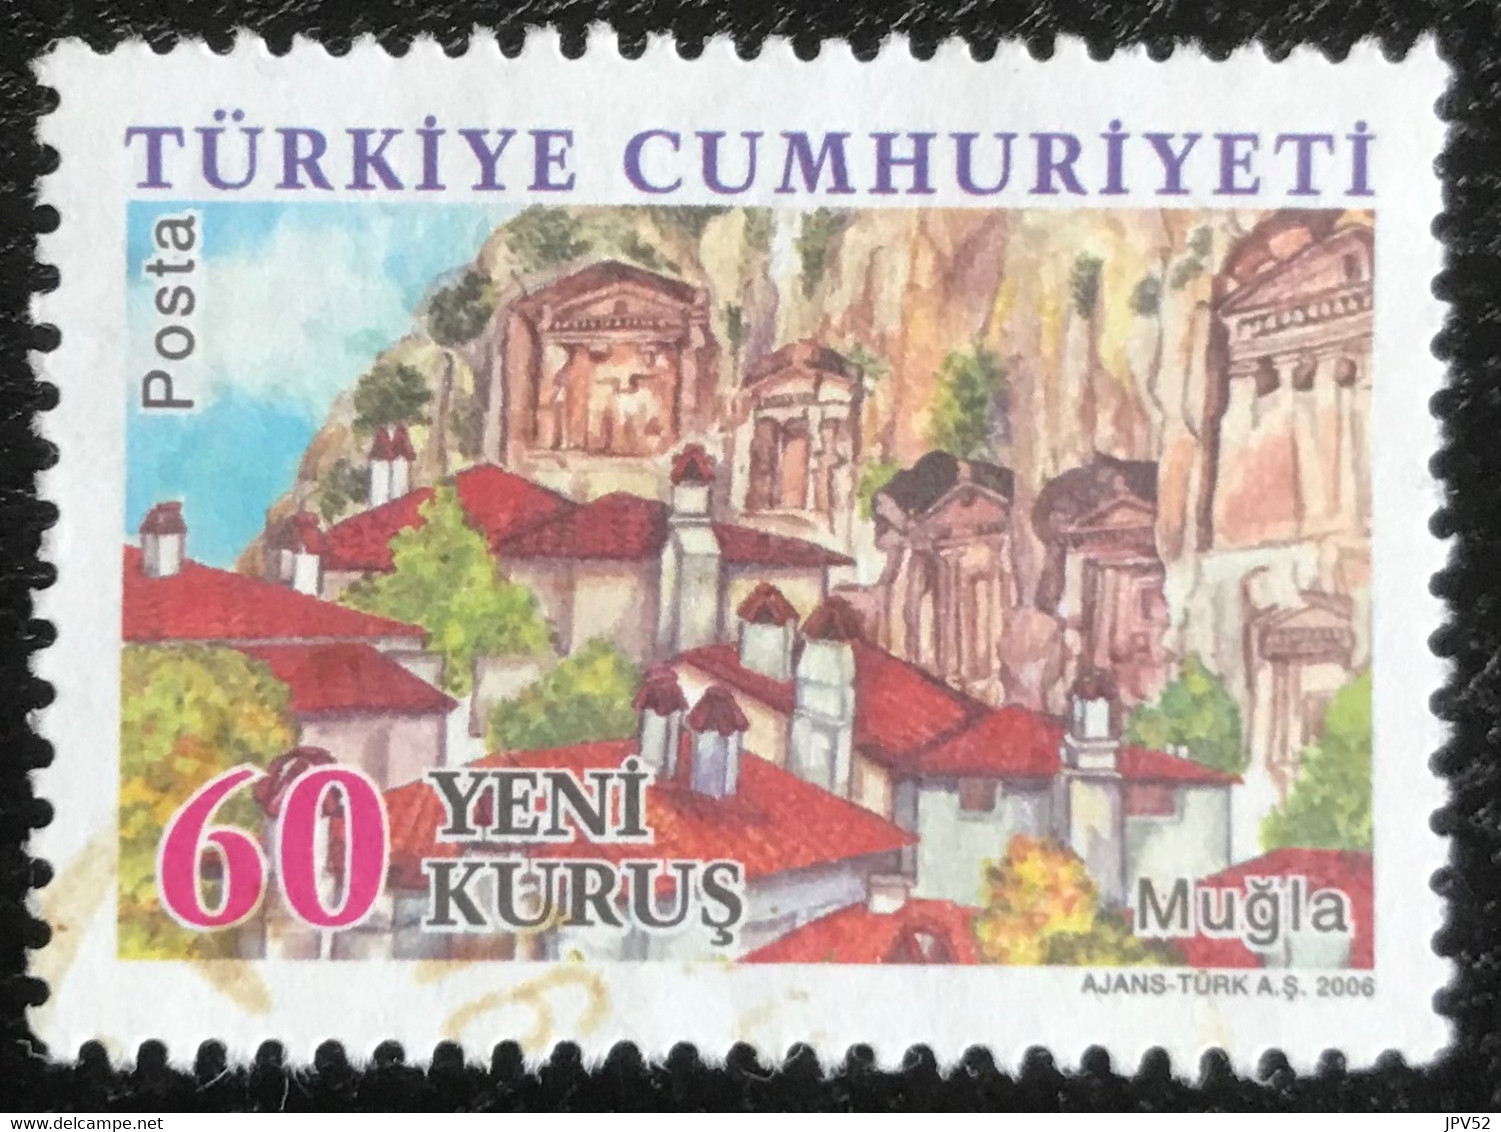 Türkiye Cumhuriyeti - Turkije - C11/21 - (°)used - 2006 - Michel 3539 - Mugla - Gebraucht